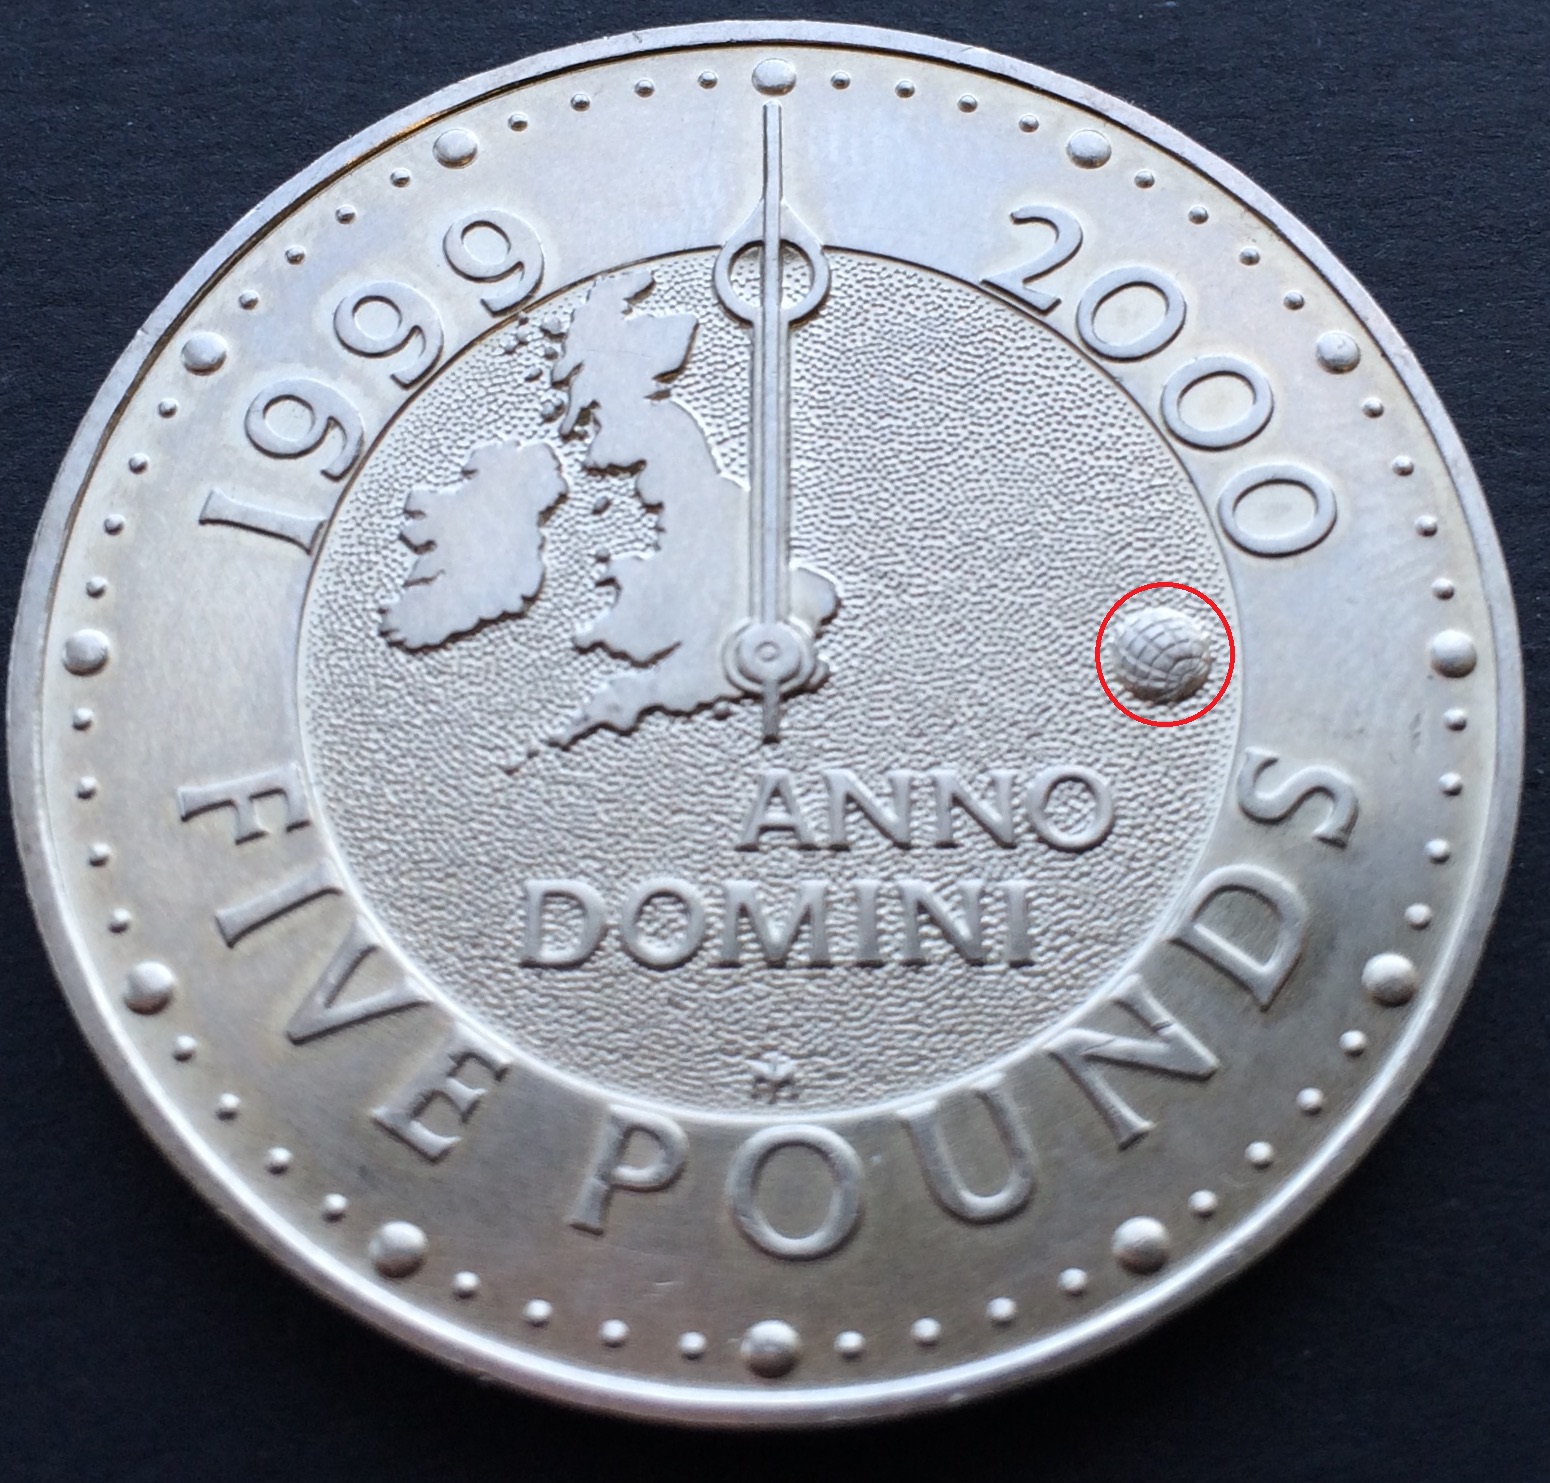 The Millennium £5 with Millennium Dome mintmark